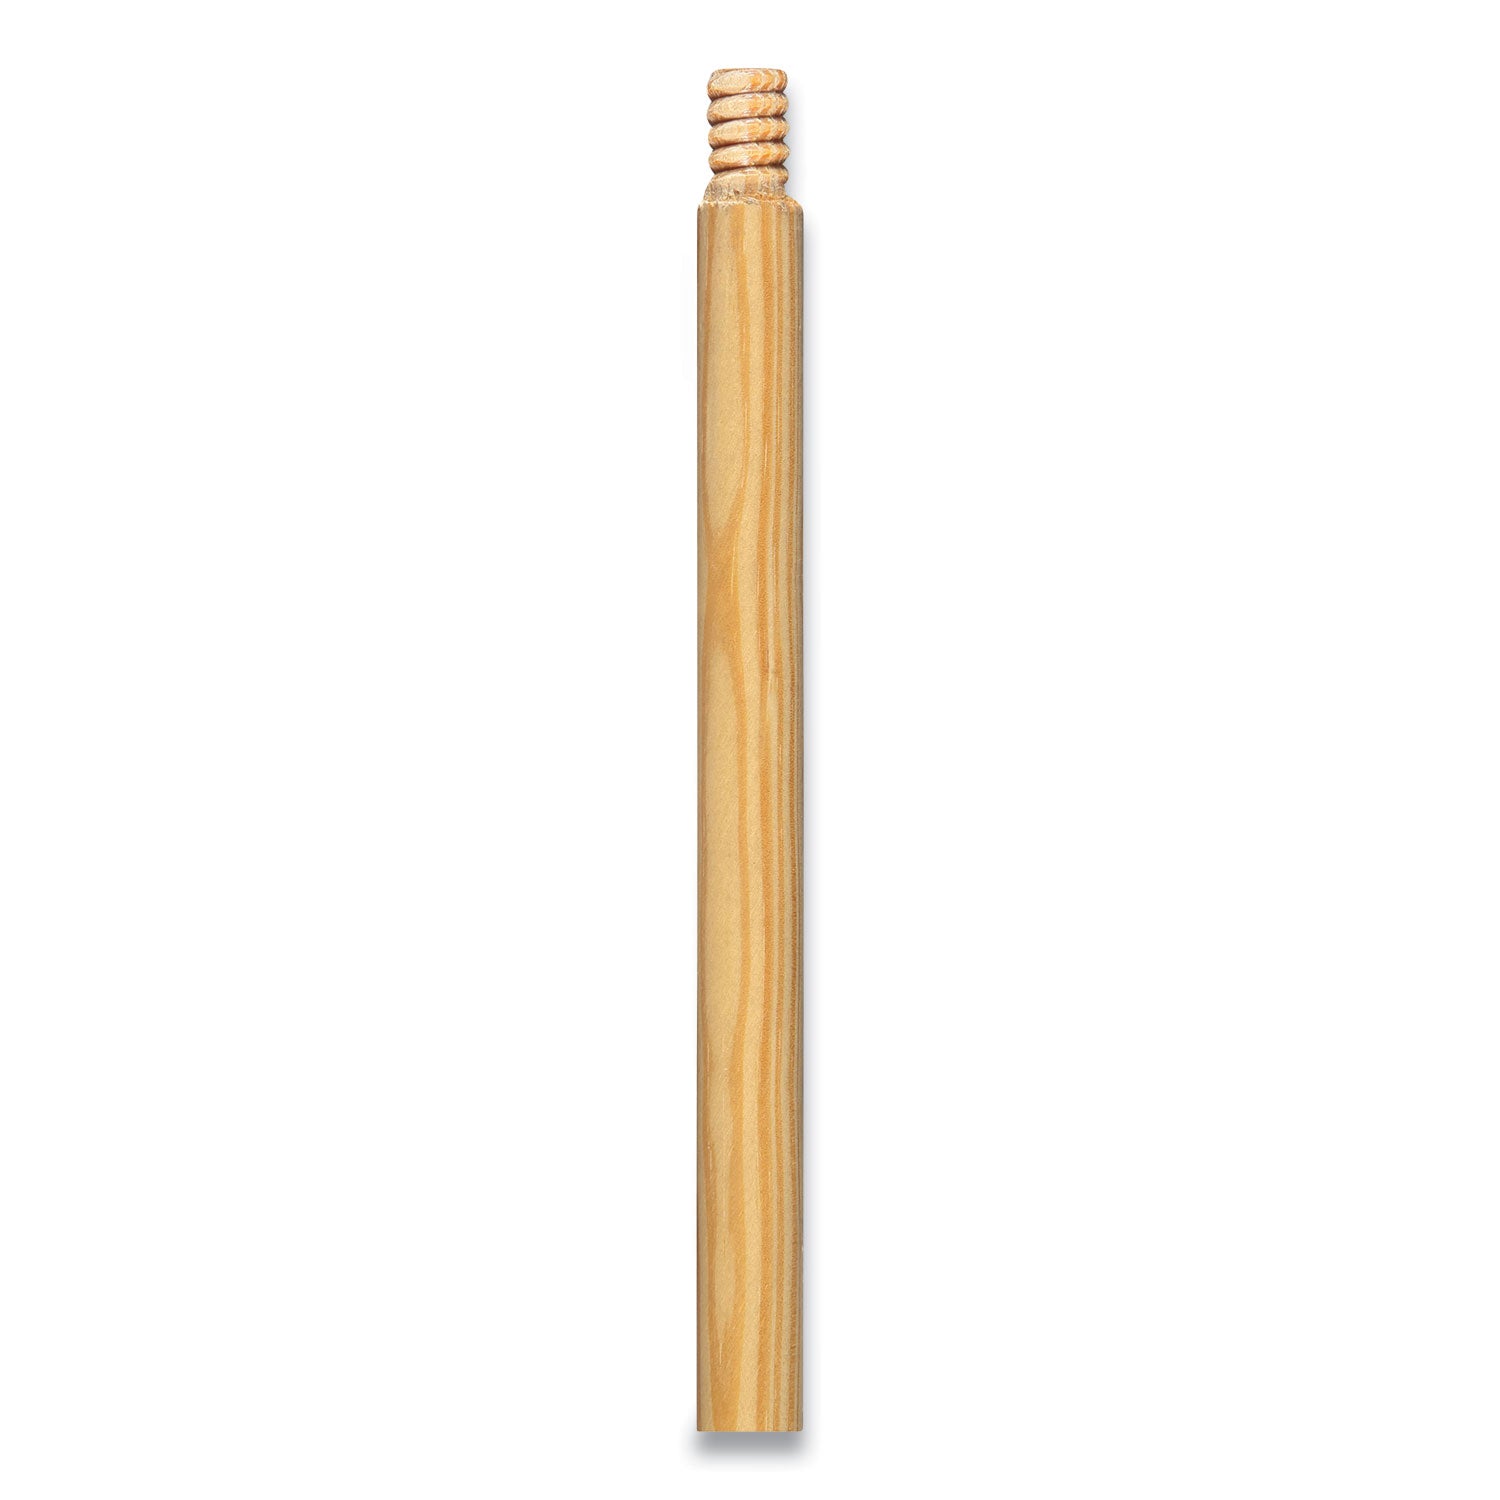 push-broom-handle-with-wood-thread-wood-60-natural_cwz24420792 - 1